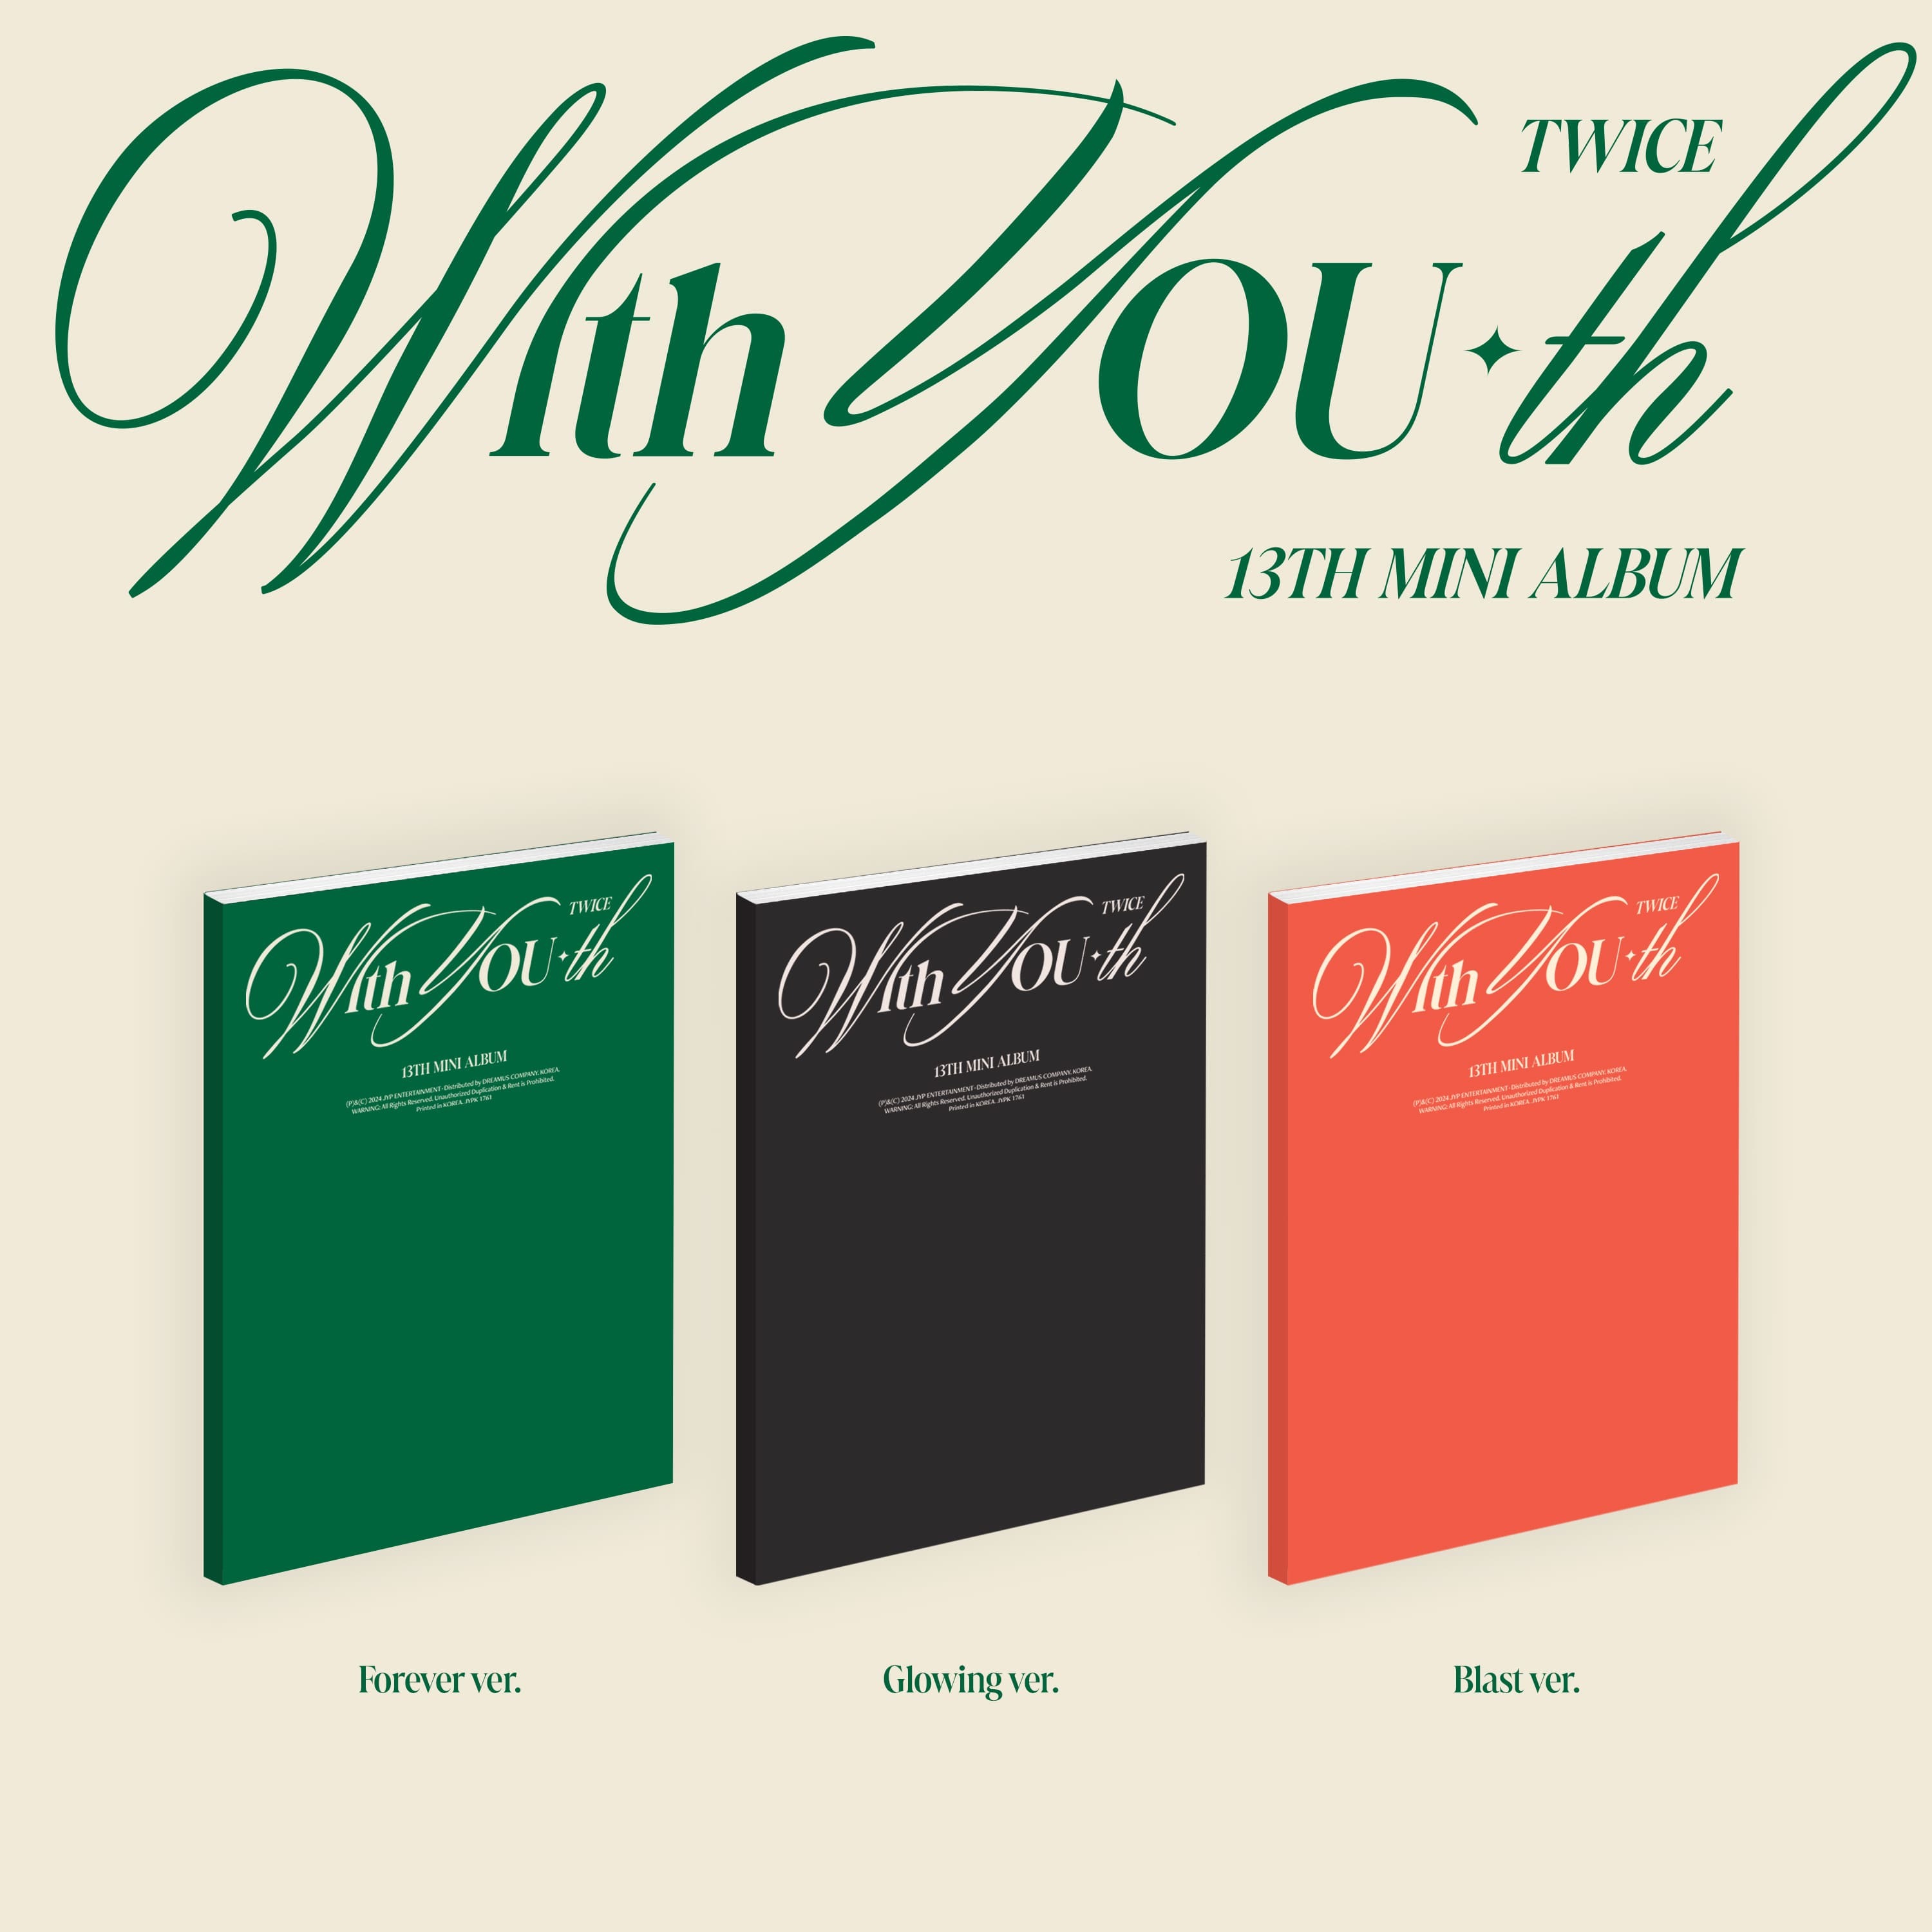 TWICE - [With YOU-th] 13th Mini Album 